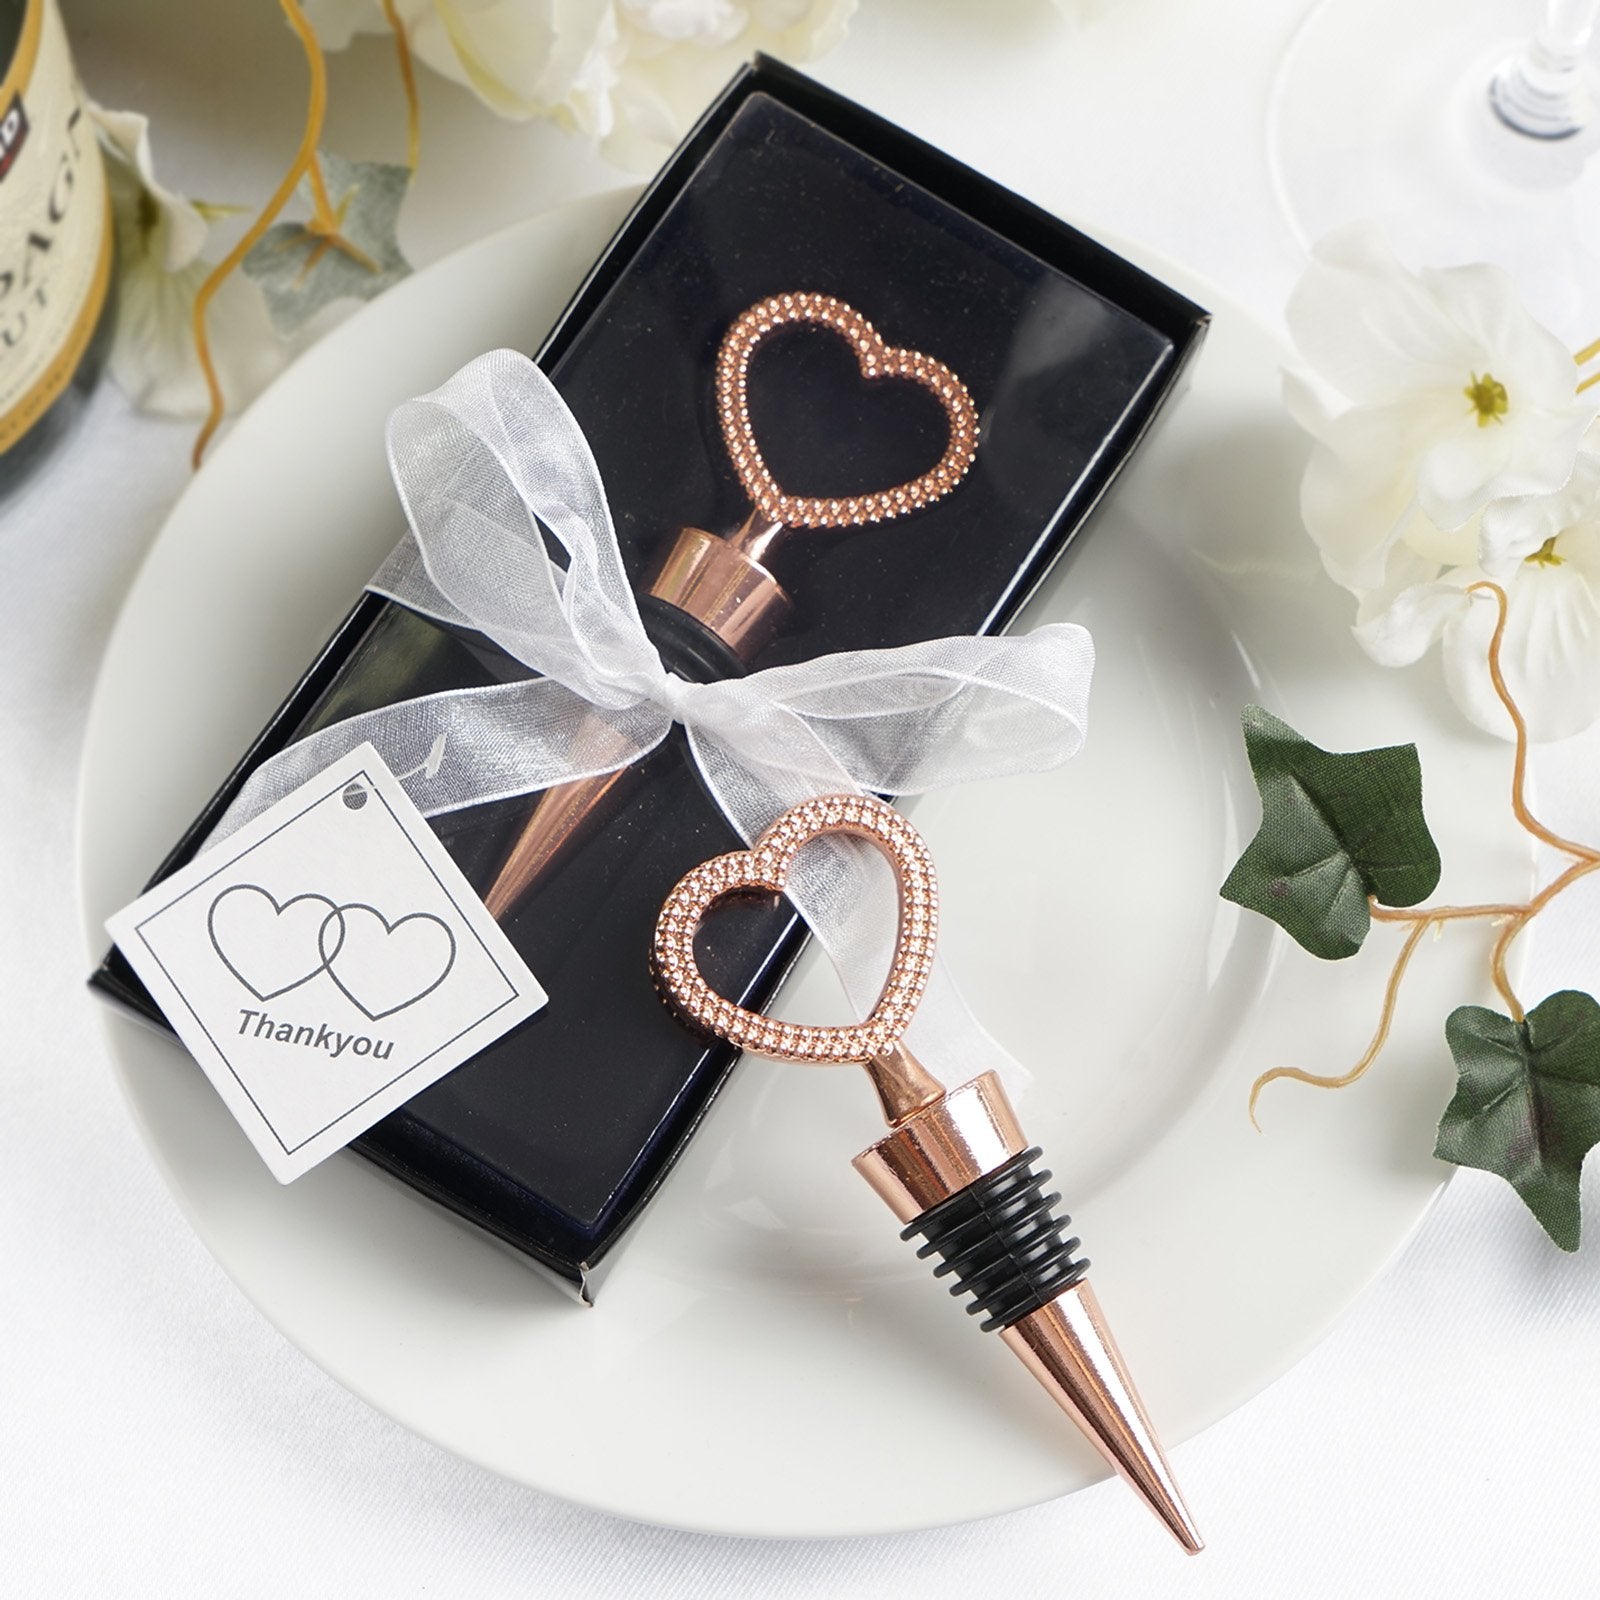 Rose Gold Metal Heart-Shaped Wine Bottle Stopper Wedding Favor with Velvet Gift Box - 1 Piece